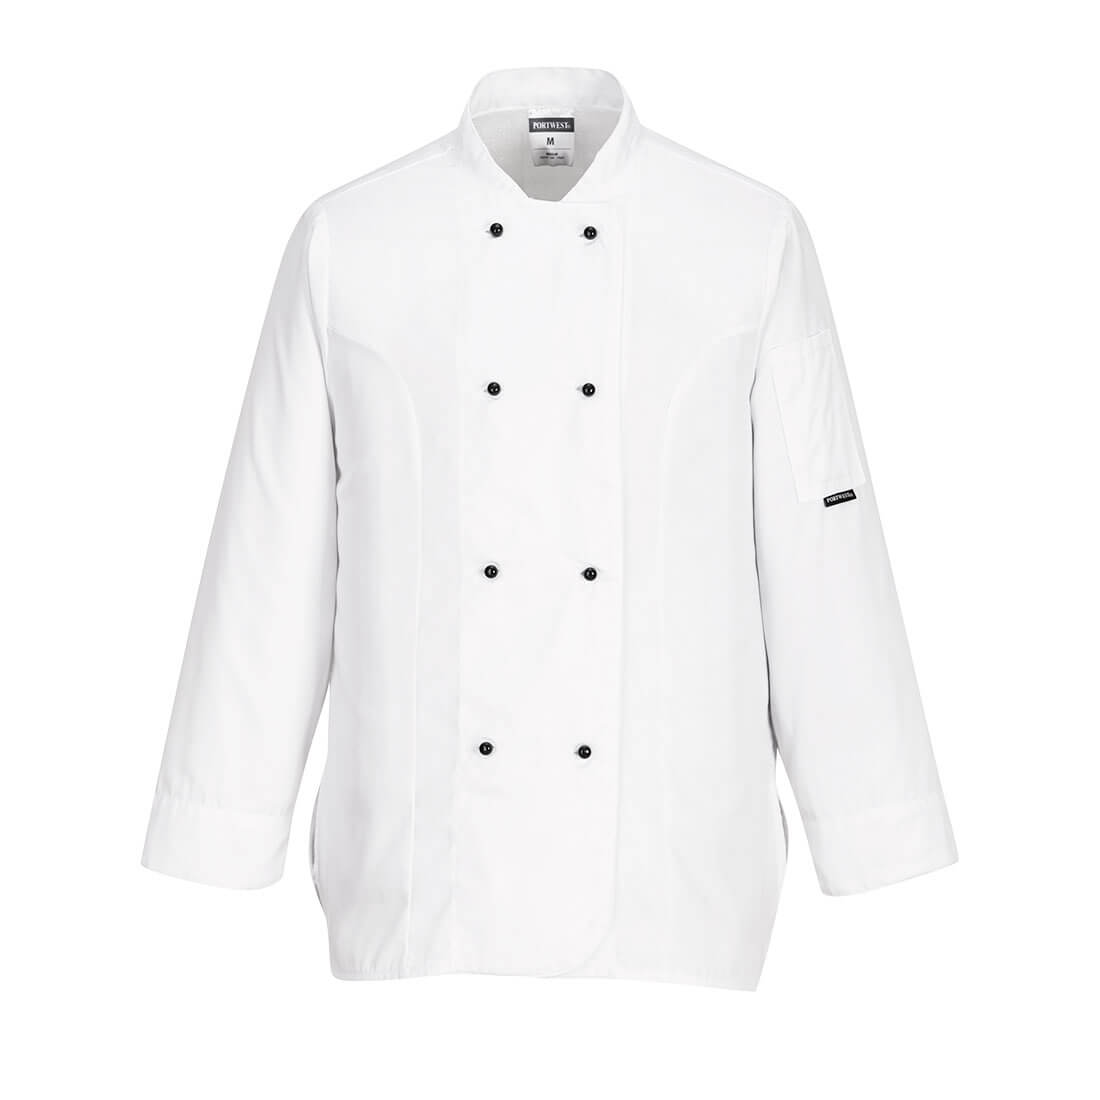 C837 - Rachel Women's Chefs Jacket L/S - White